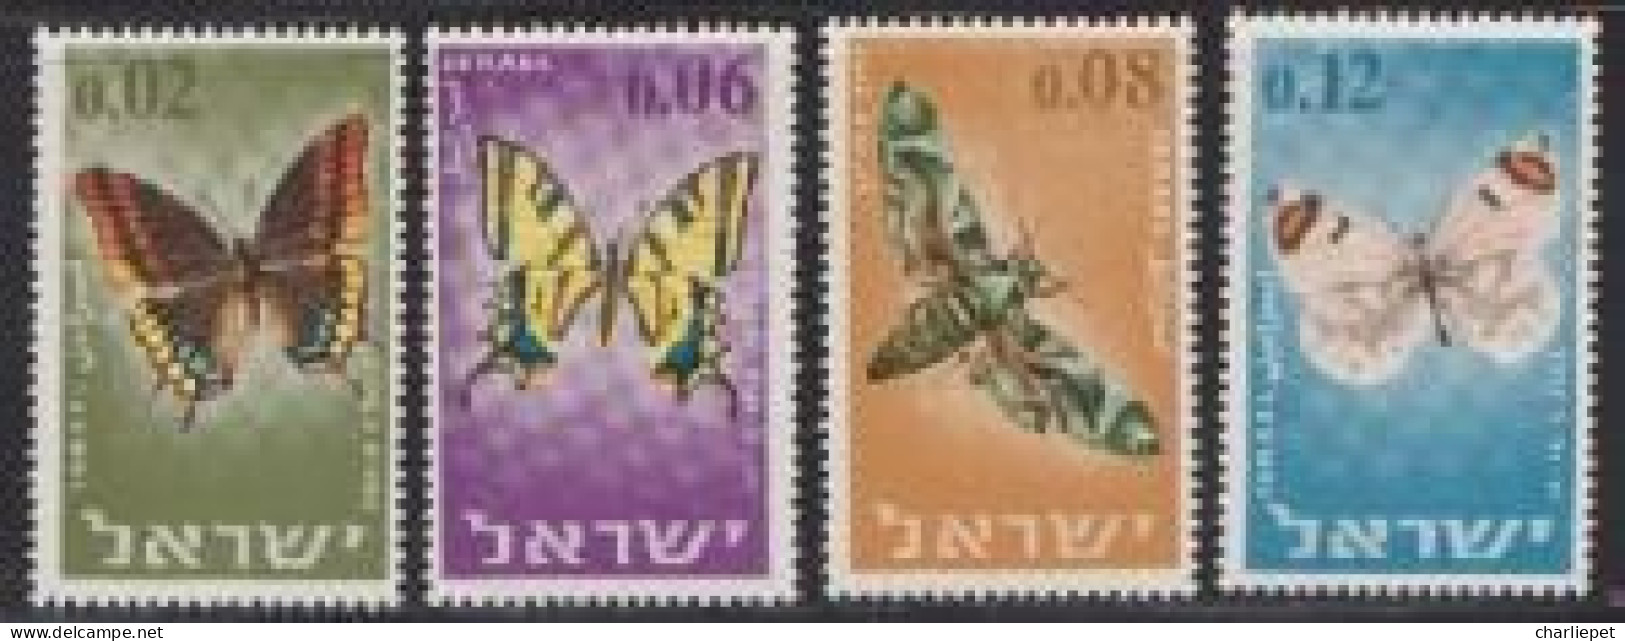 Israel Scott #  304-307  MNH VF Butterflies - Nuevos (sin Tab)